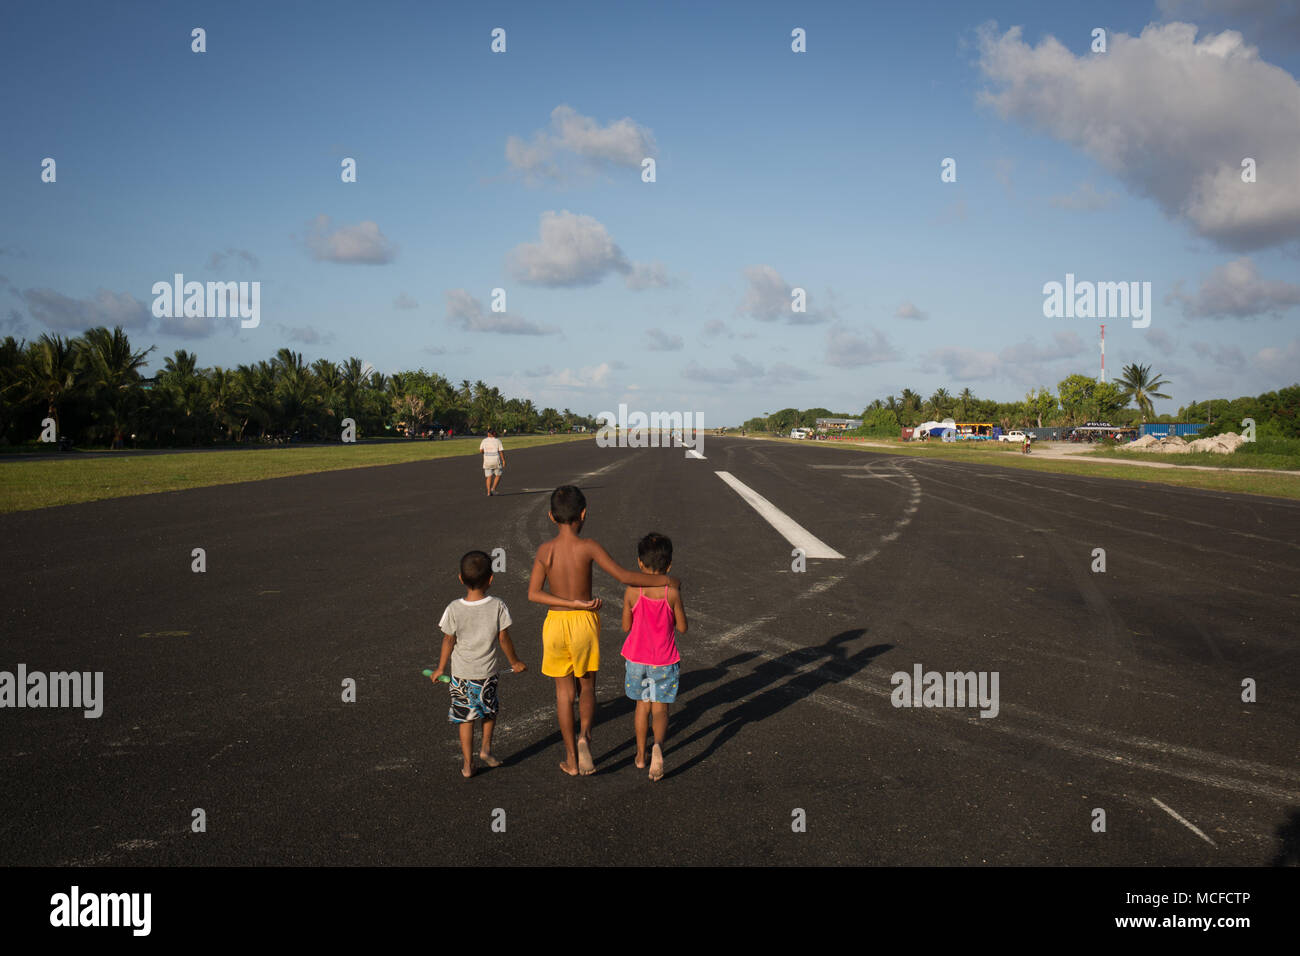 958 Tuvalu Wallpaper Images, Stock Photos & Vectors | Shutterstock